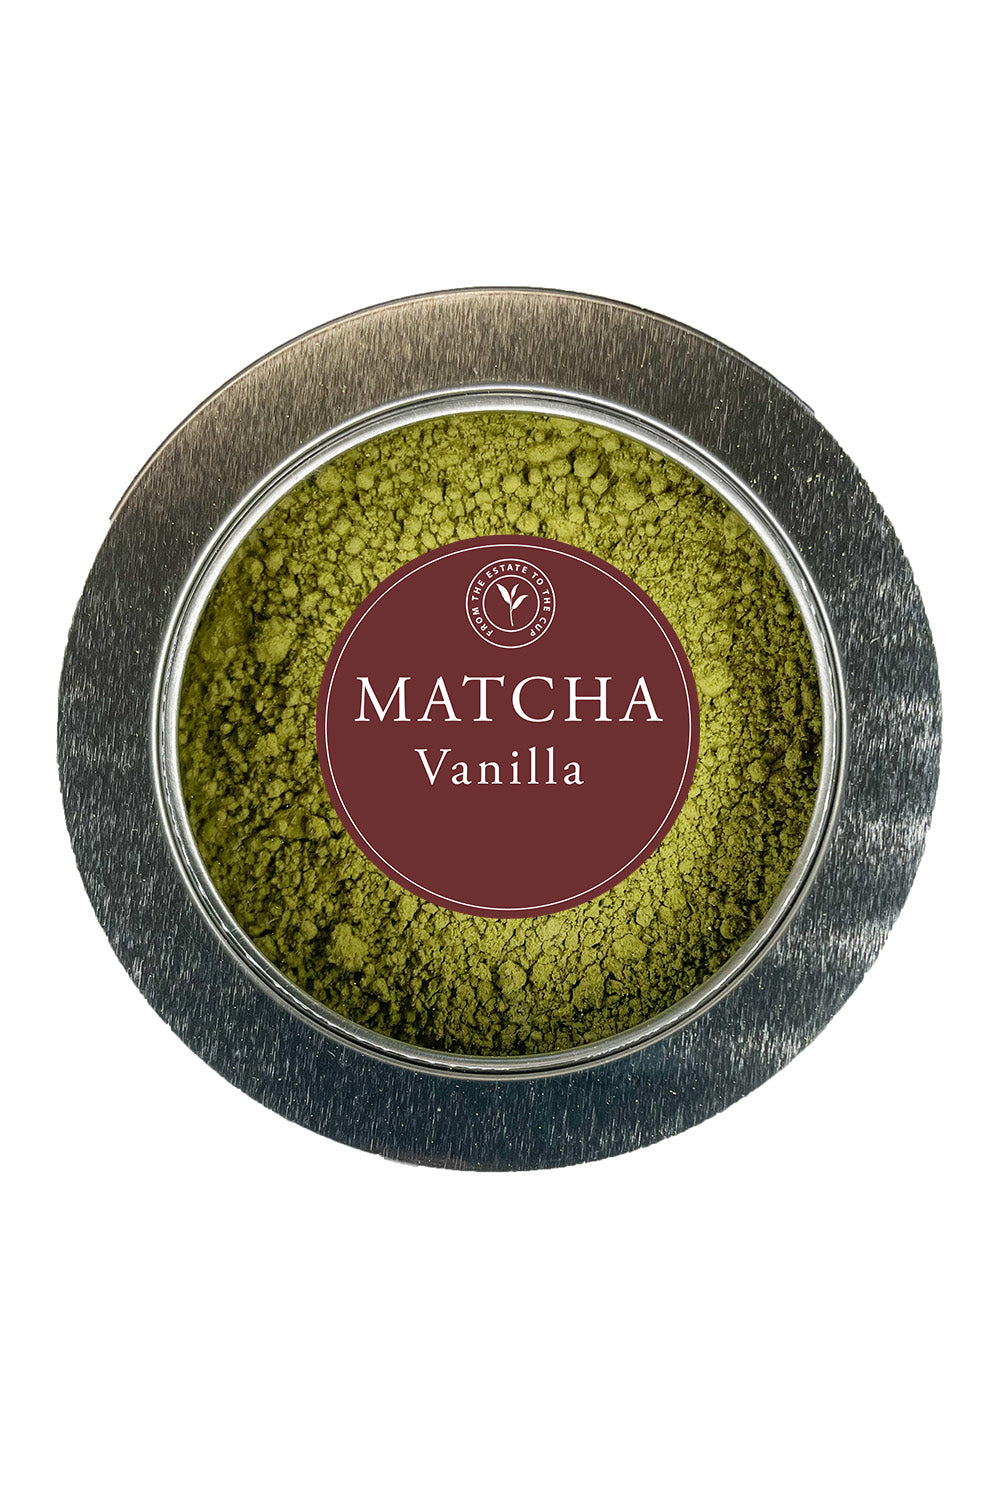 Vanilla Matcha-40 g tin-Loose Leaf Tea-High Teas